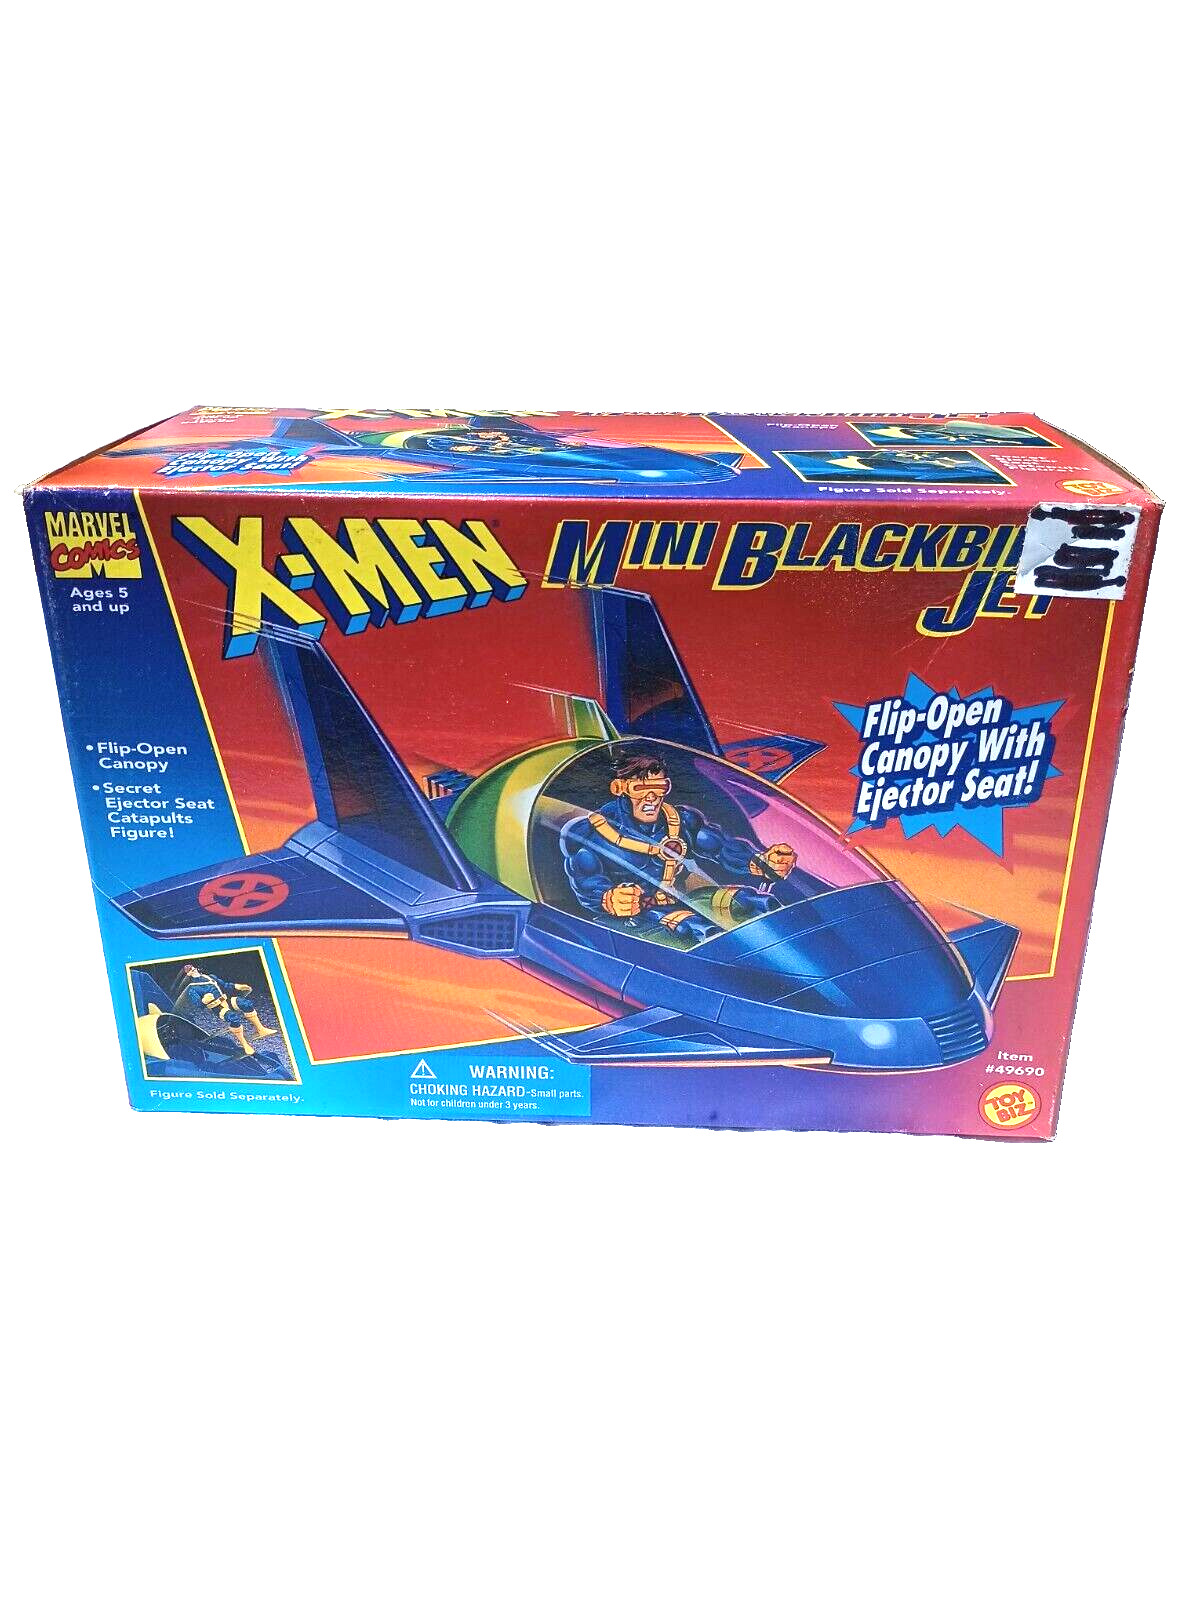 NEW 1995 Marvel Comics X-Men Mini Blackbird Jet Vehicle by Toy Biz (Sealed)